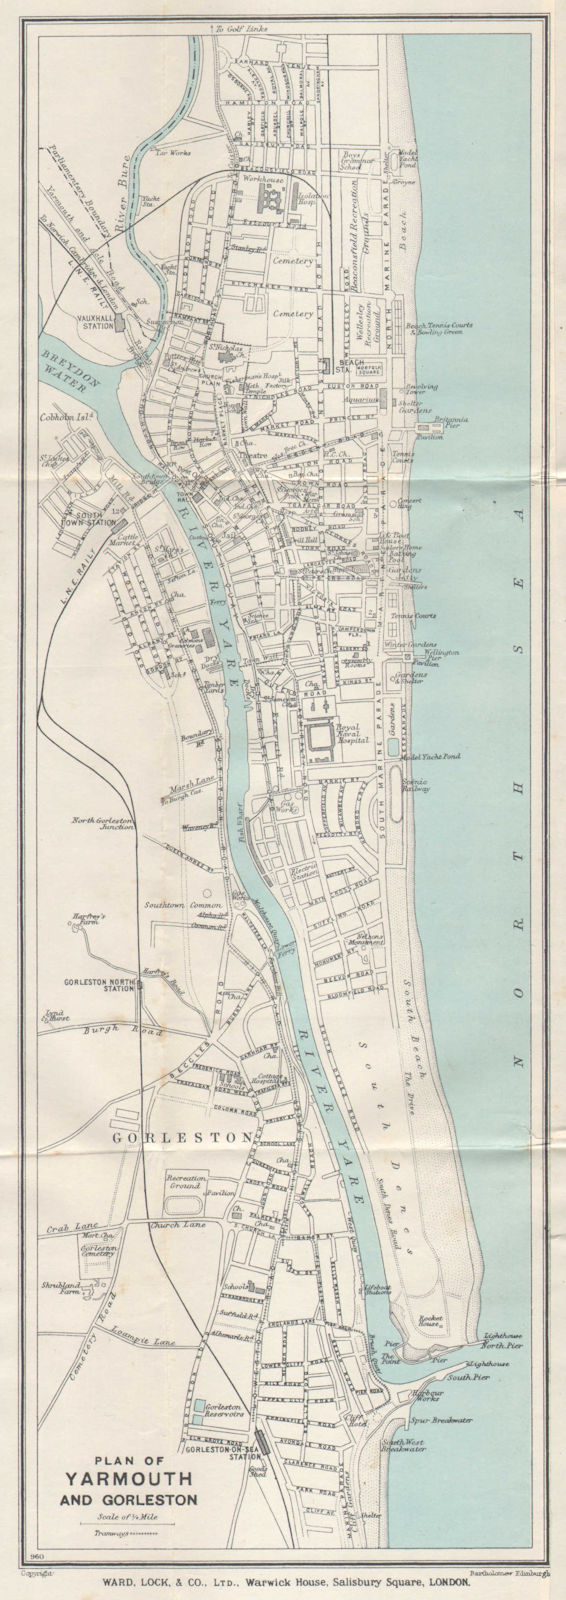 Associate Product YARMOUTH & GORLESTON vintage tourist town city plan. Norfolk. WARD LOCK 1928 map